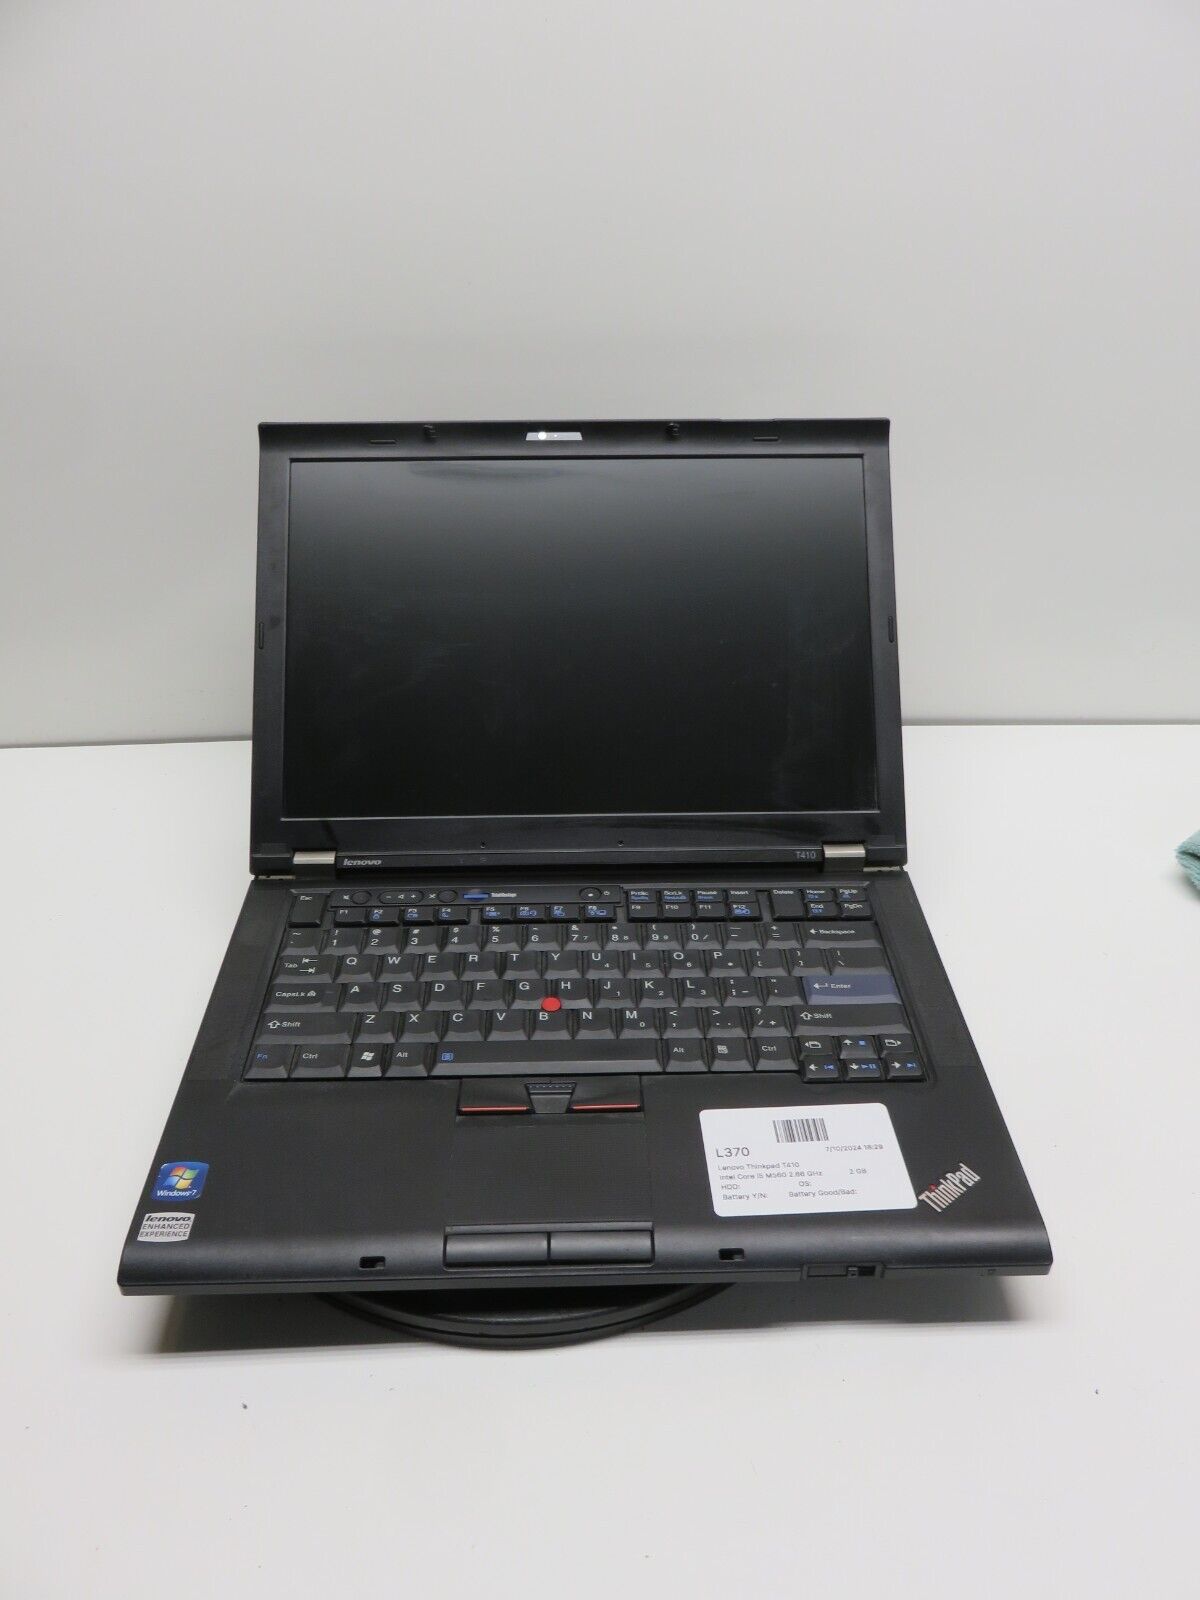 Lenovo Thinkpad T410 Laptop Intel Core i5-M560 2GB Ram No HDD or Battery